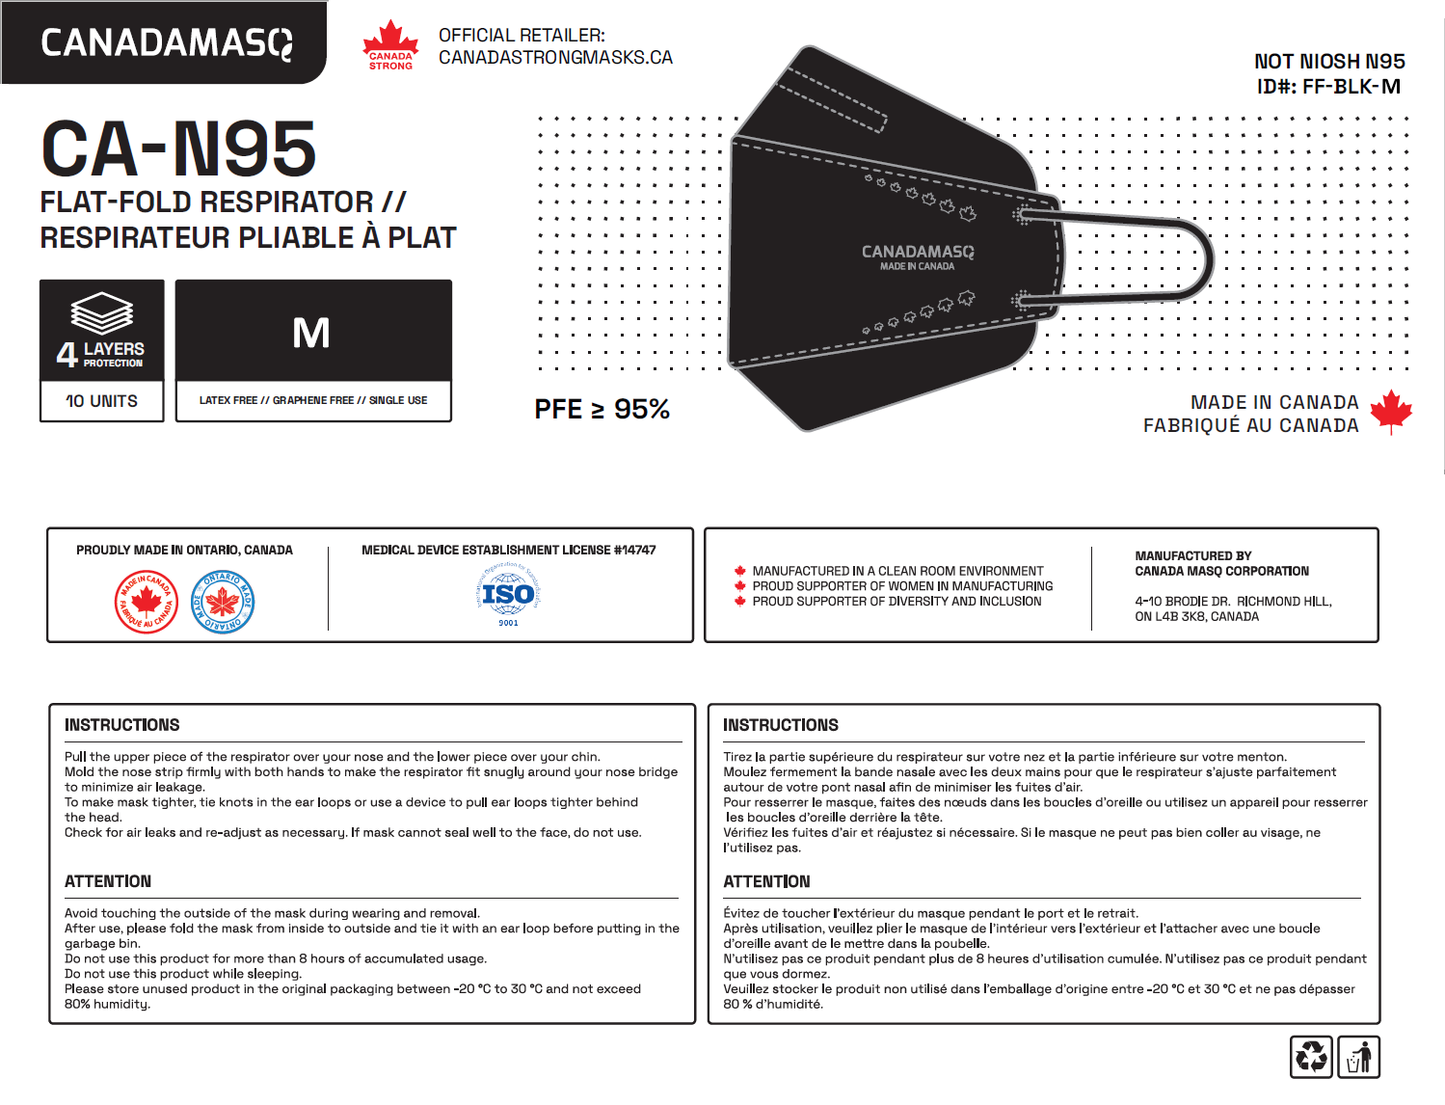 Canada Masq CA-N95 size medium respirator mask bag packaging